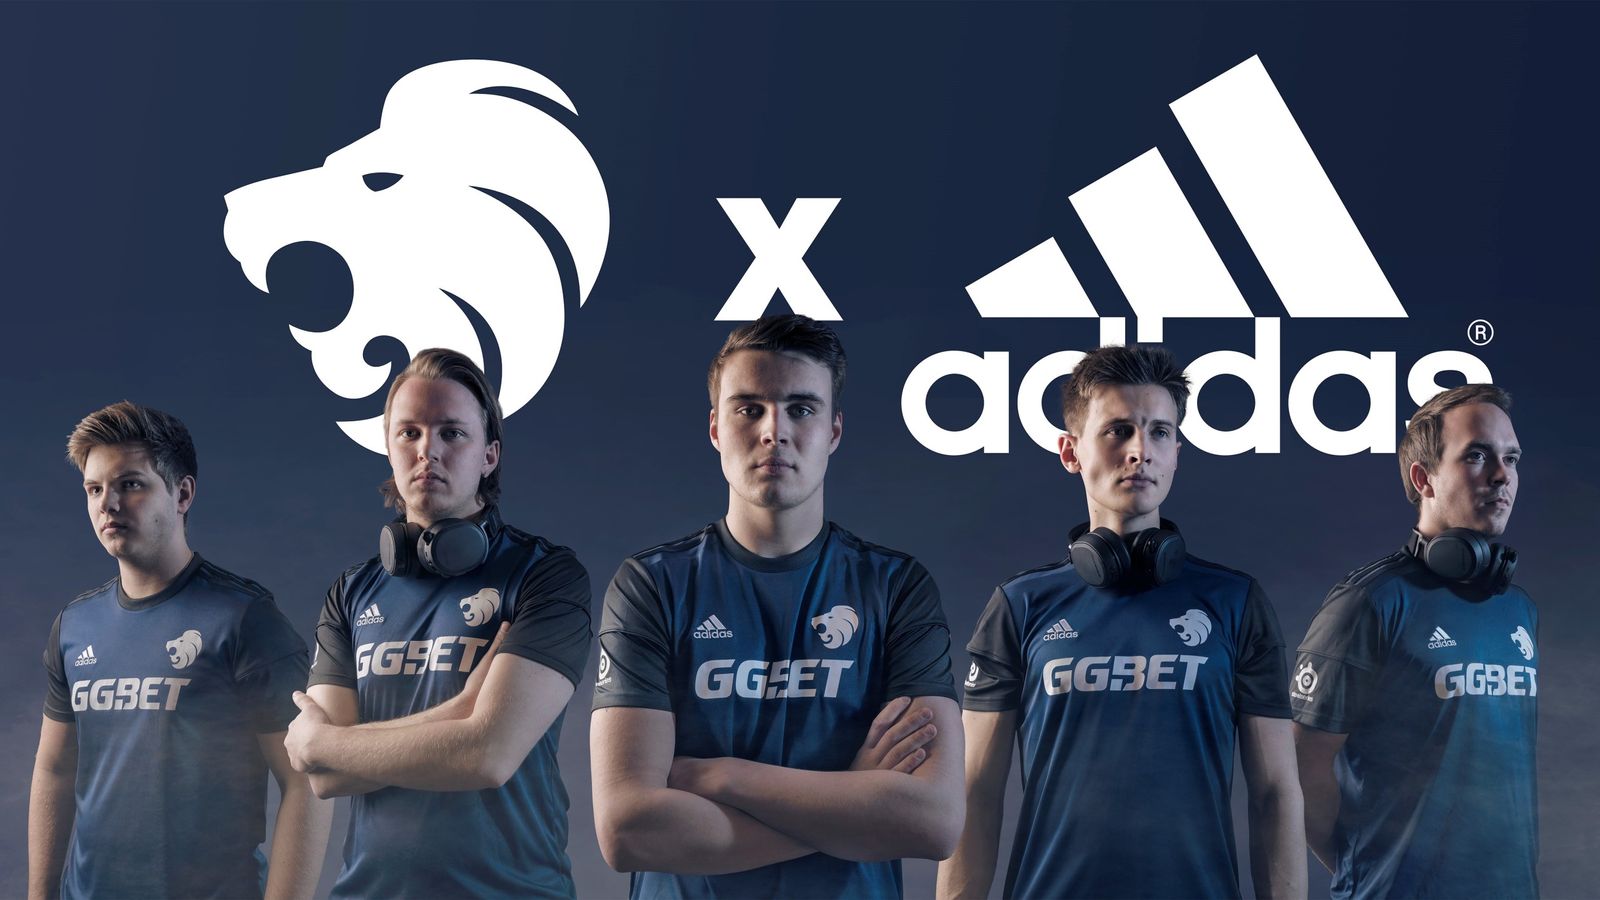 eSport team North have announced a partnership with Adidas | eSports News | Sky Sports